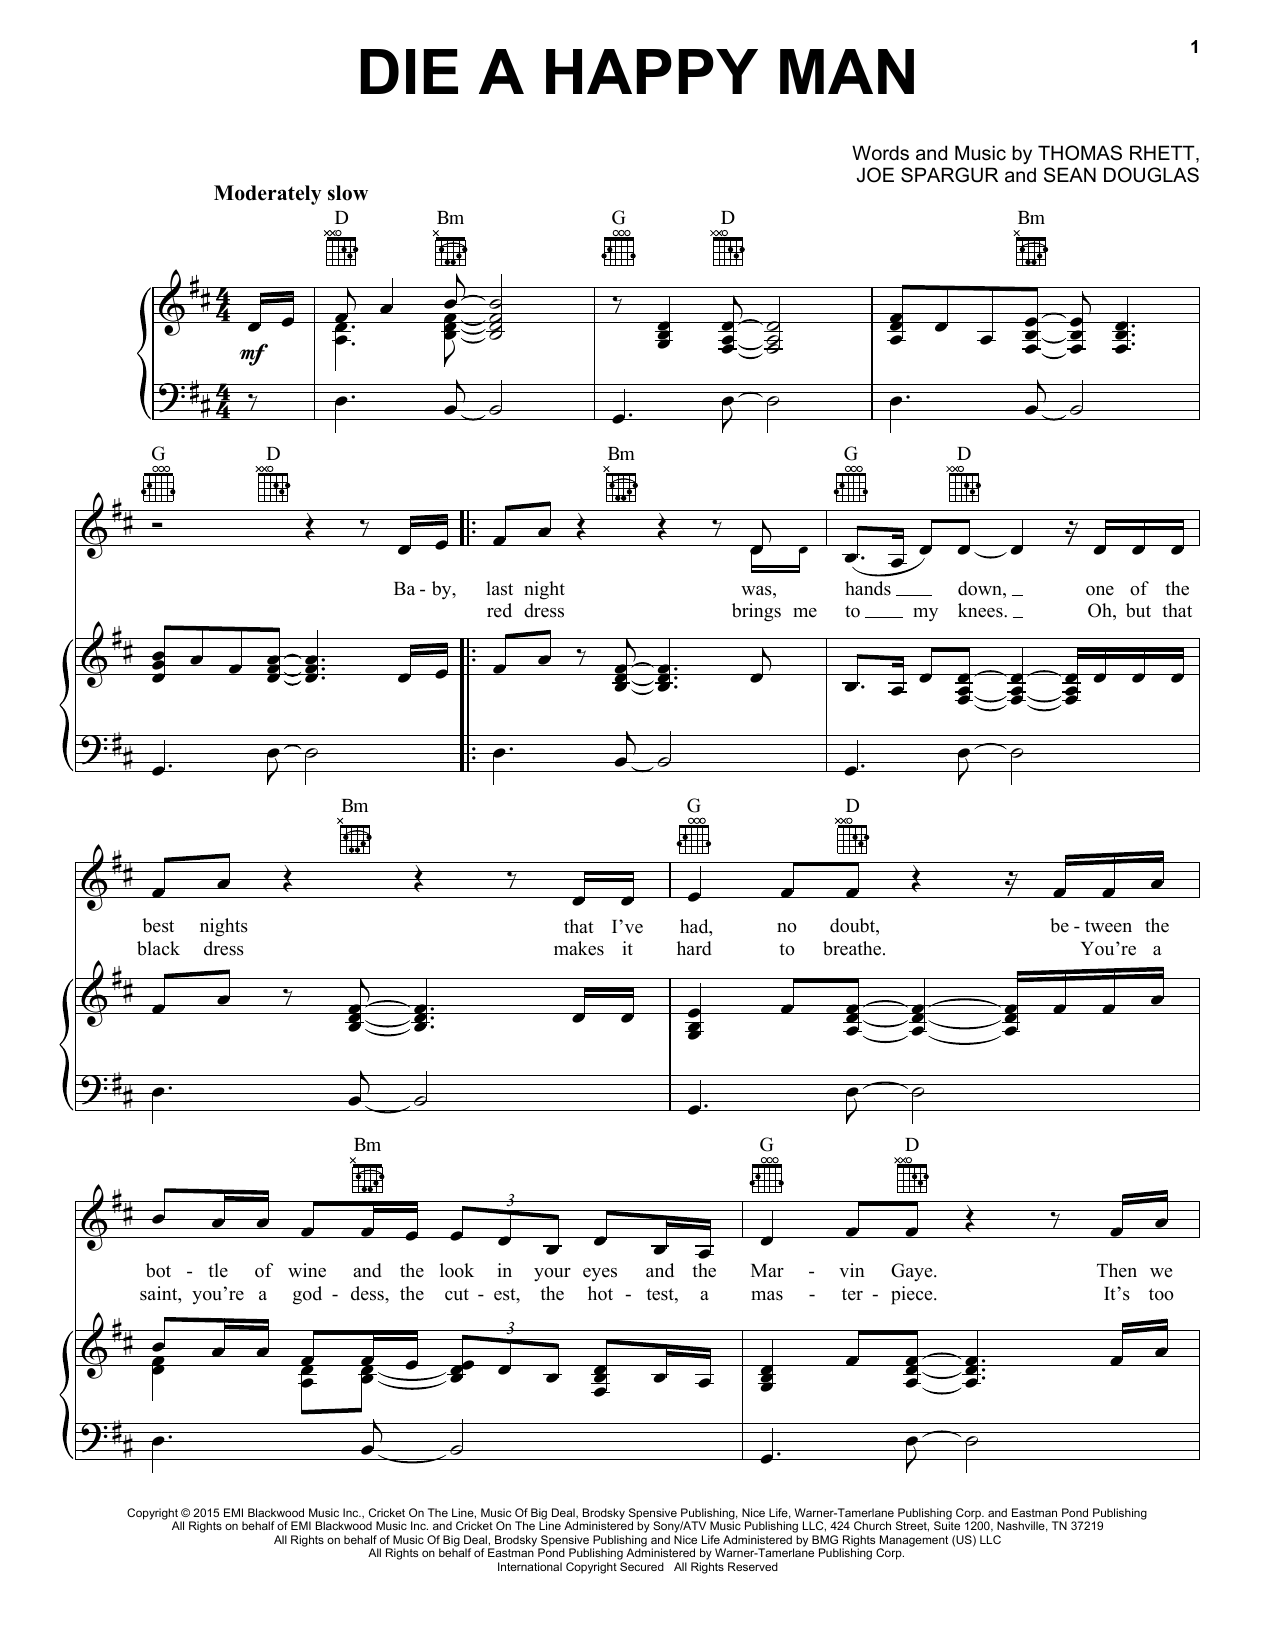 Thomas Rhett Die A Happy Man Sheet Music Notes & Chords for Tenor Saxophone - Download or Print PDF